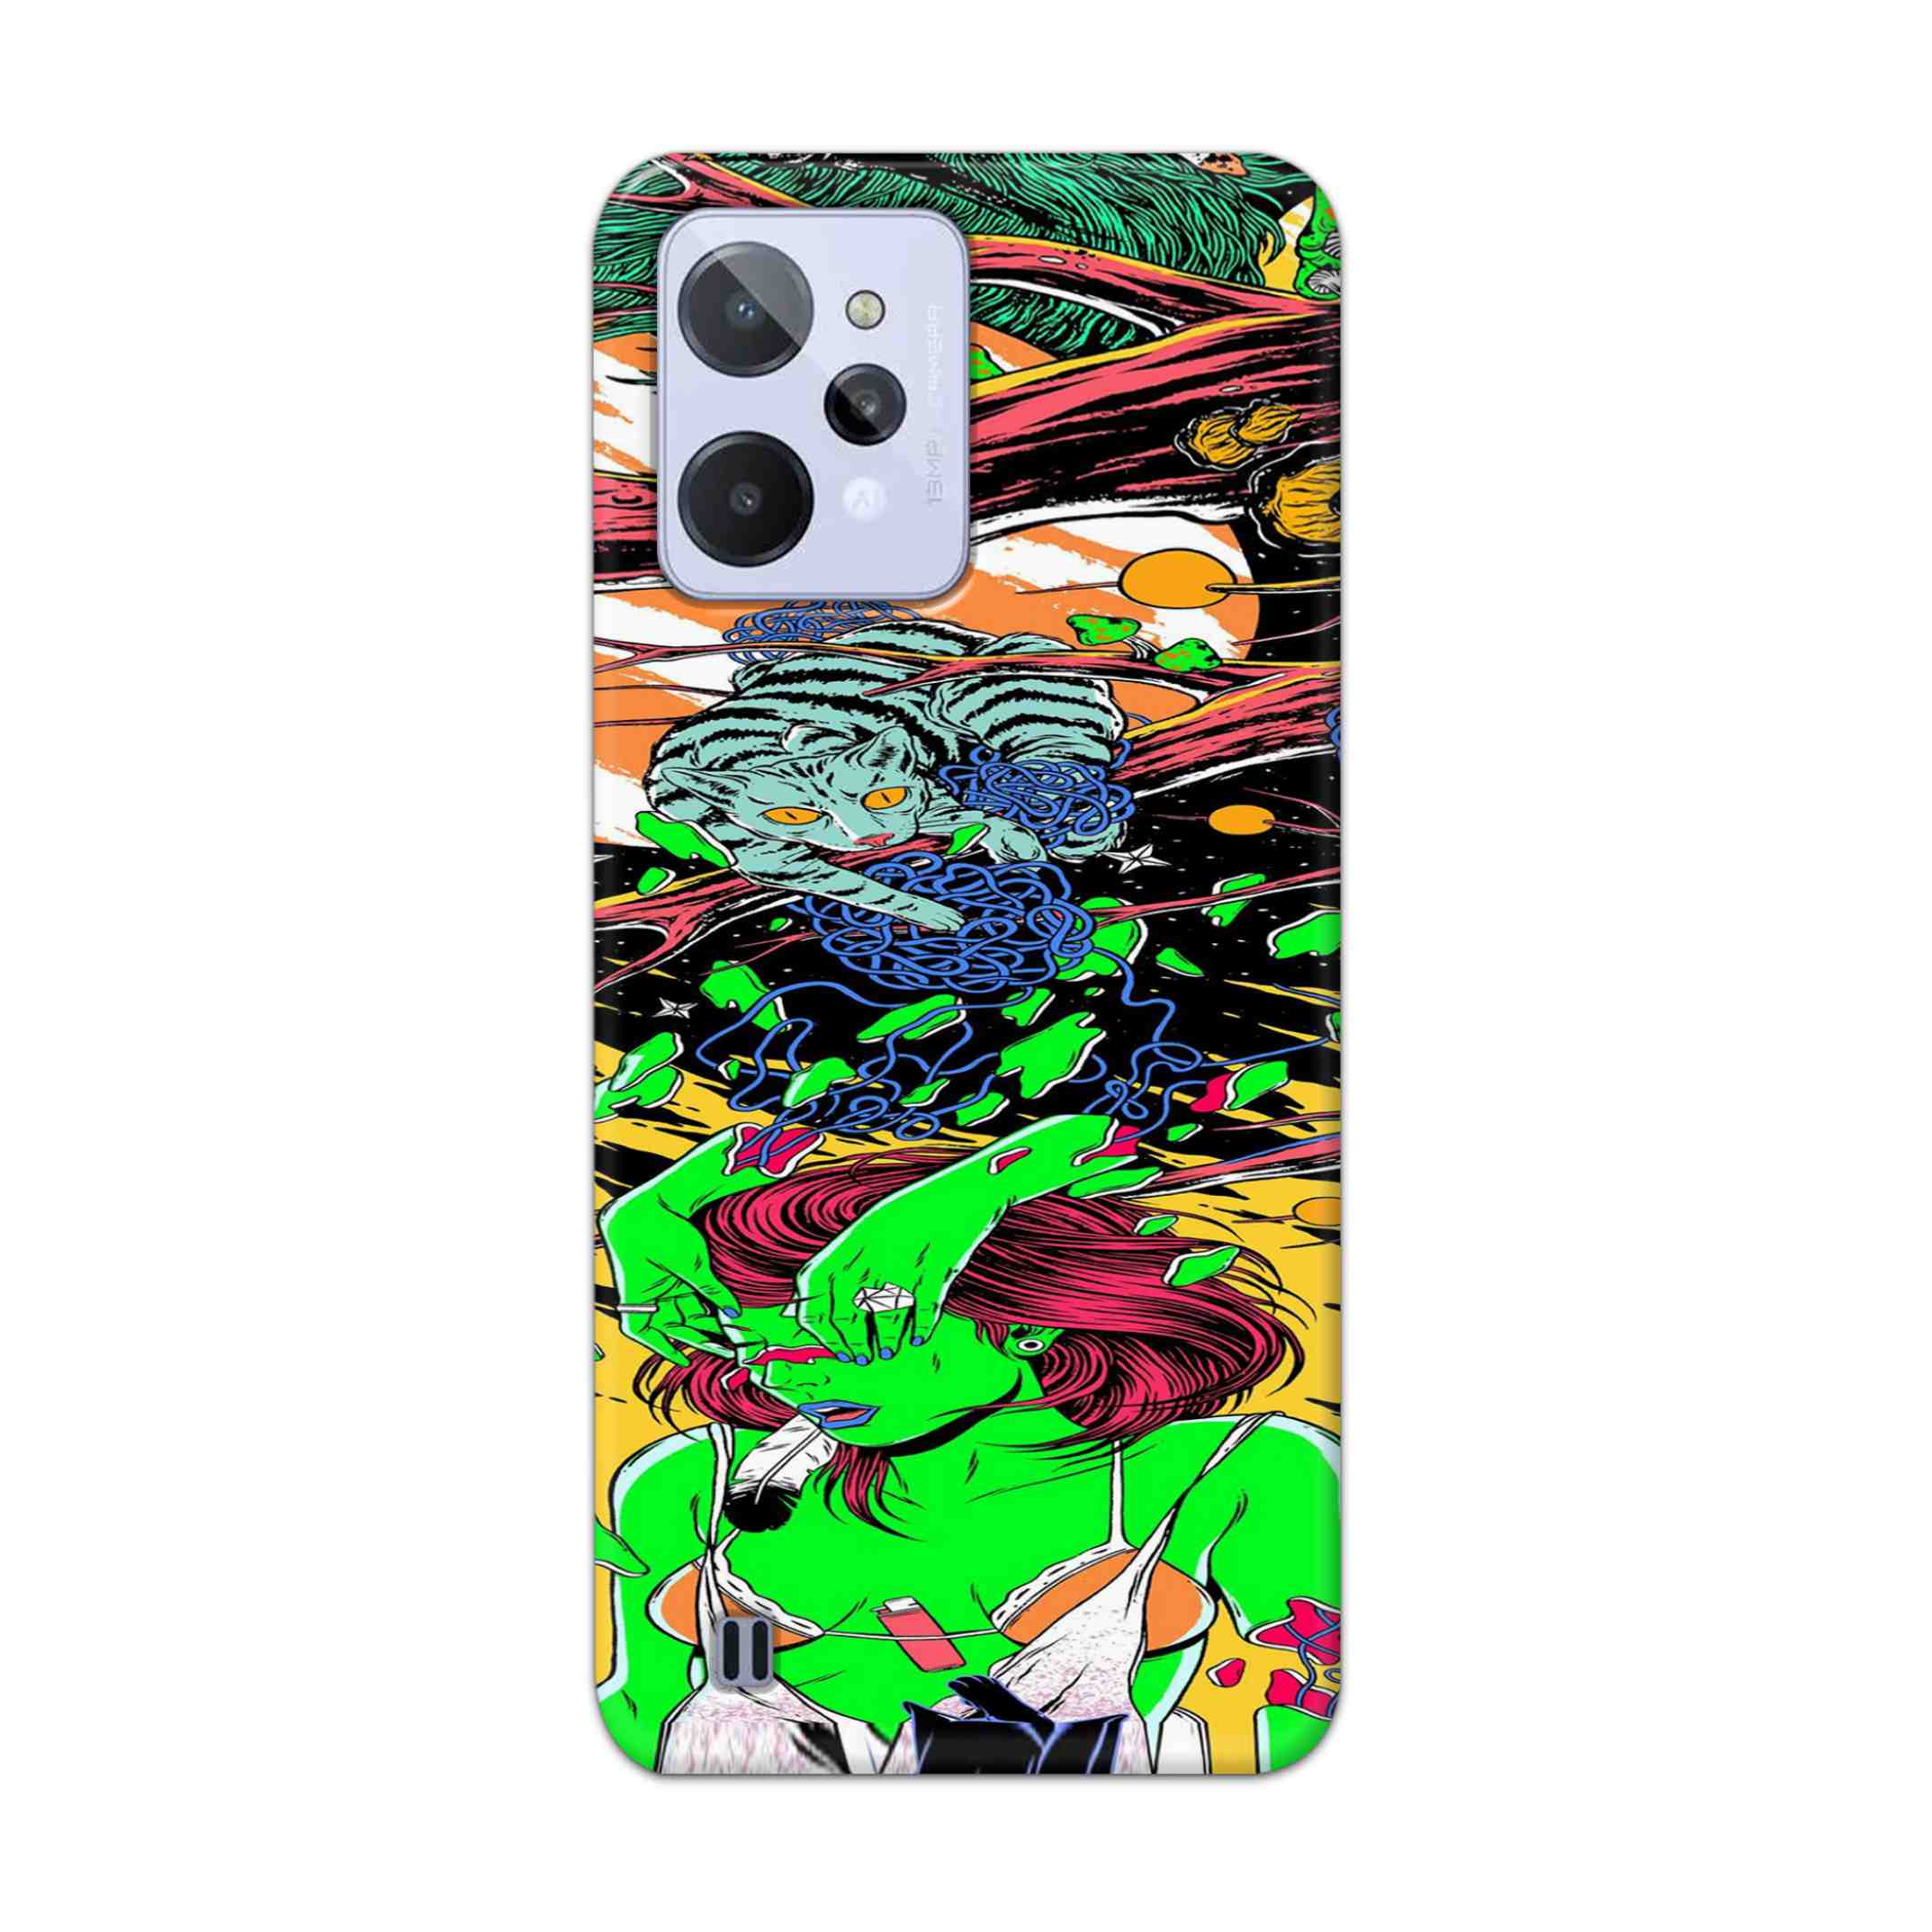 Buy Green Girl Art Hard Back Mobile Phone Case Cover For Realme C31 Online